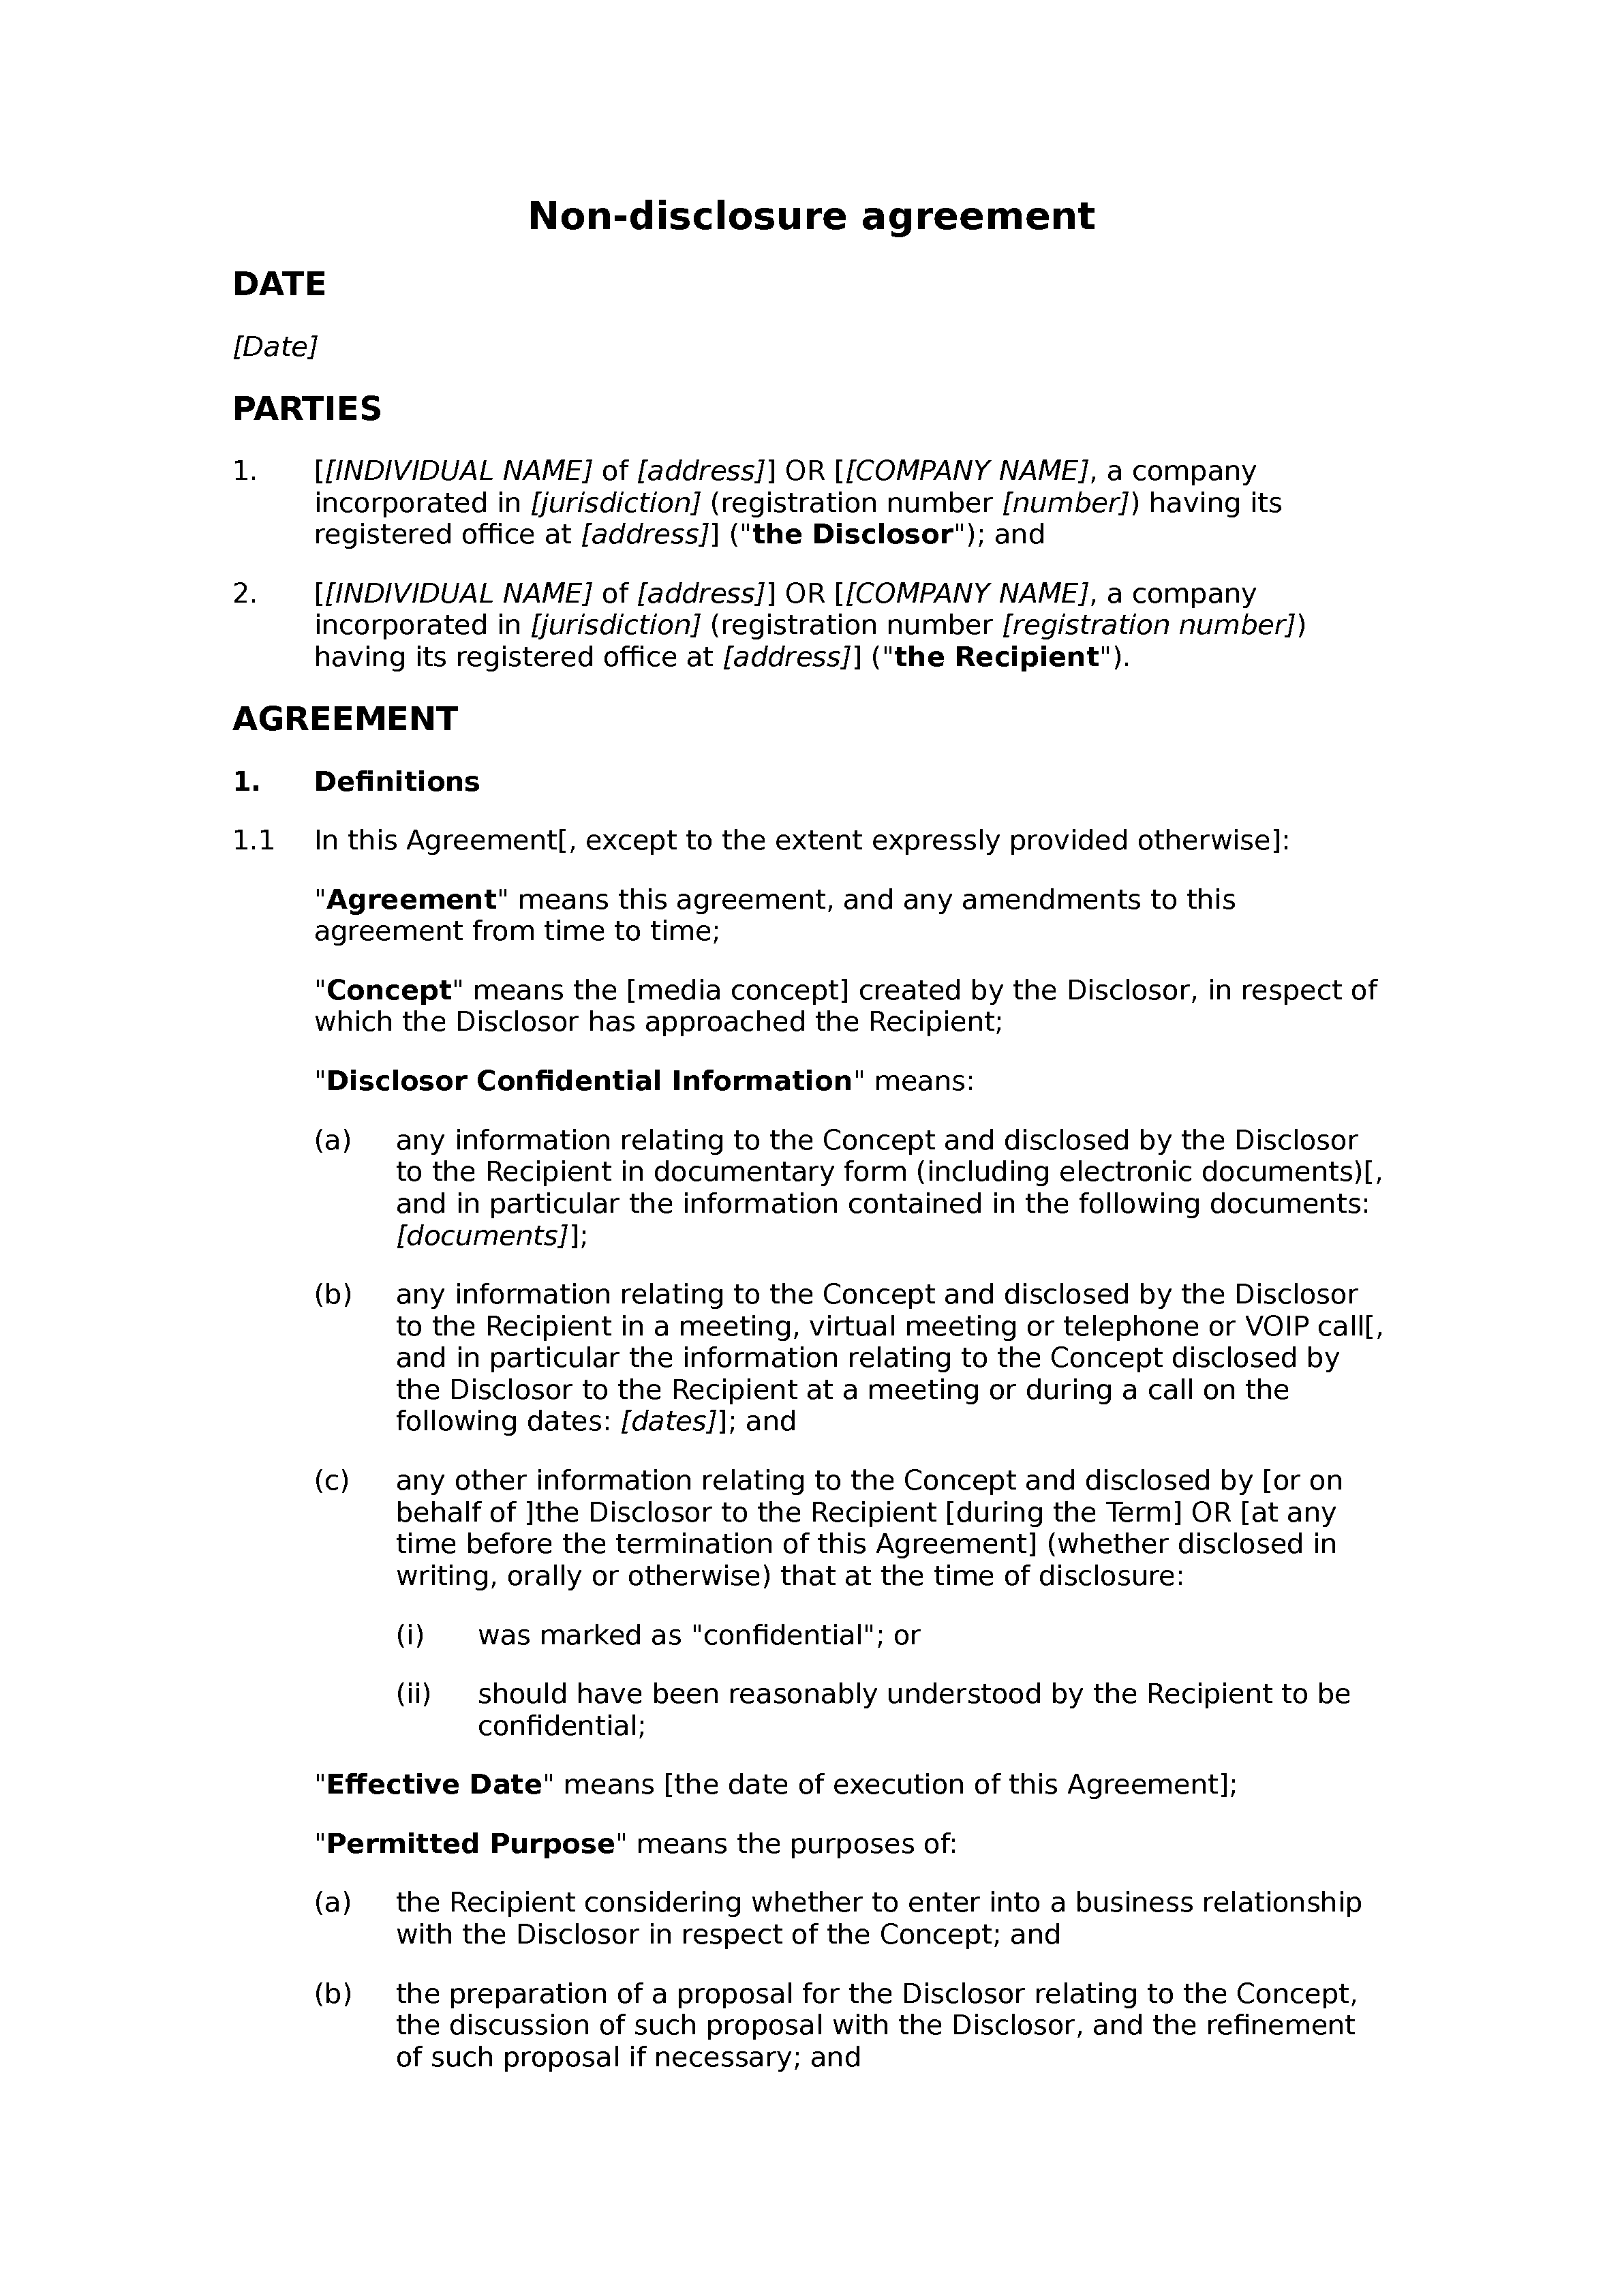 Non-disclosure agreement (media concept) - Docular Regarding film non disclosure agreement template